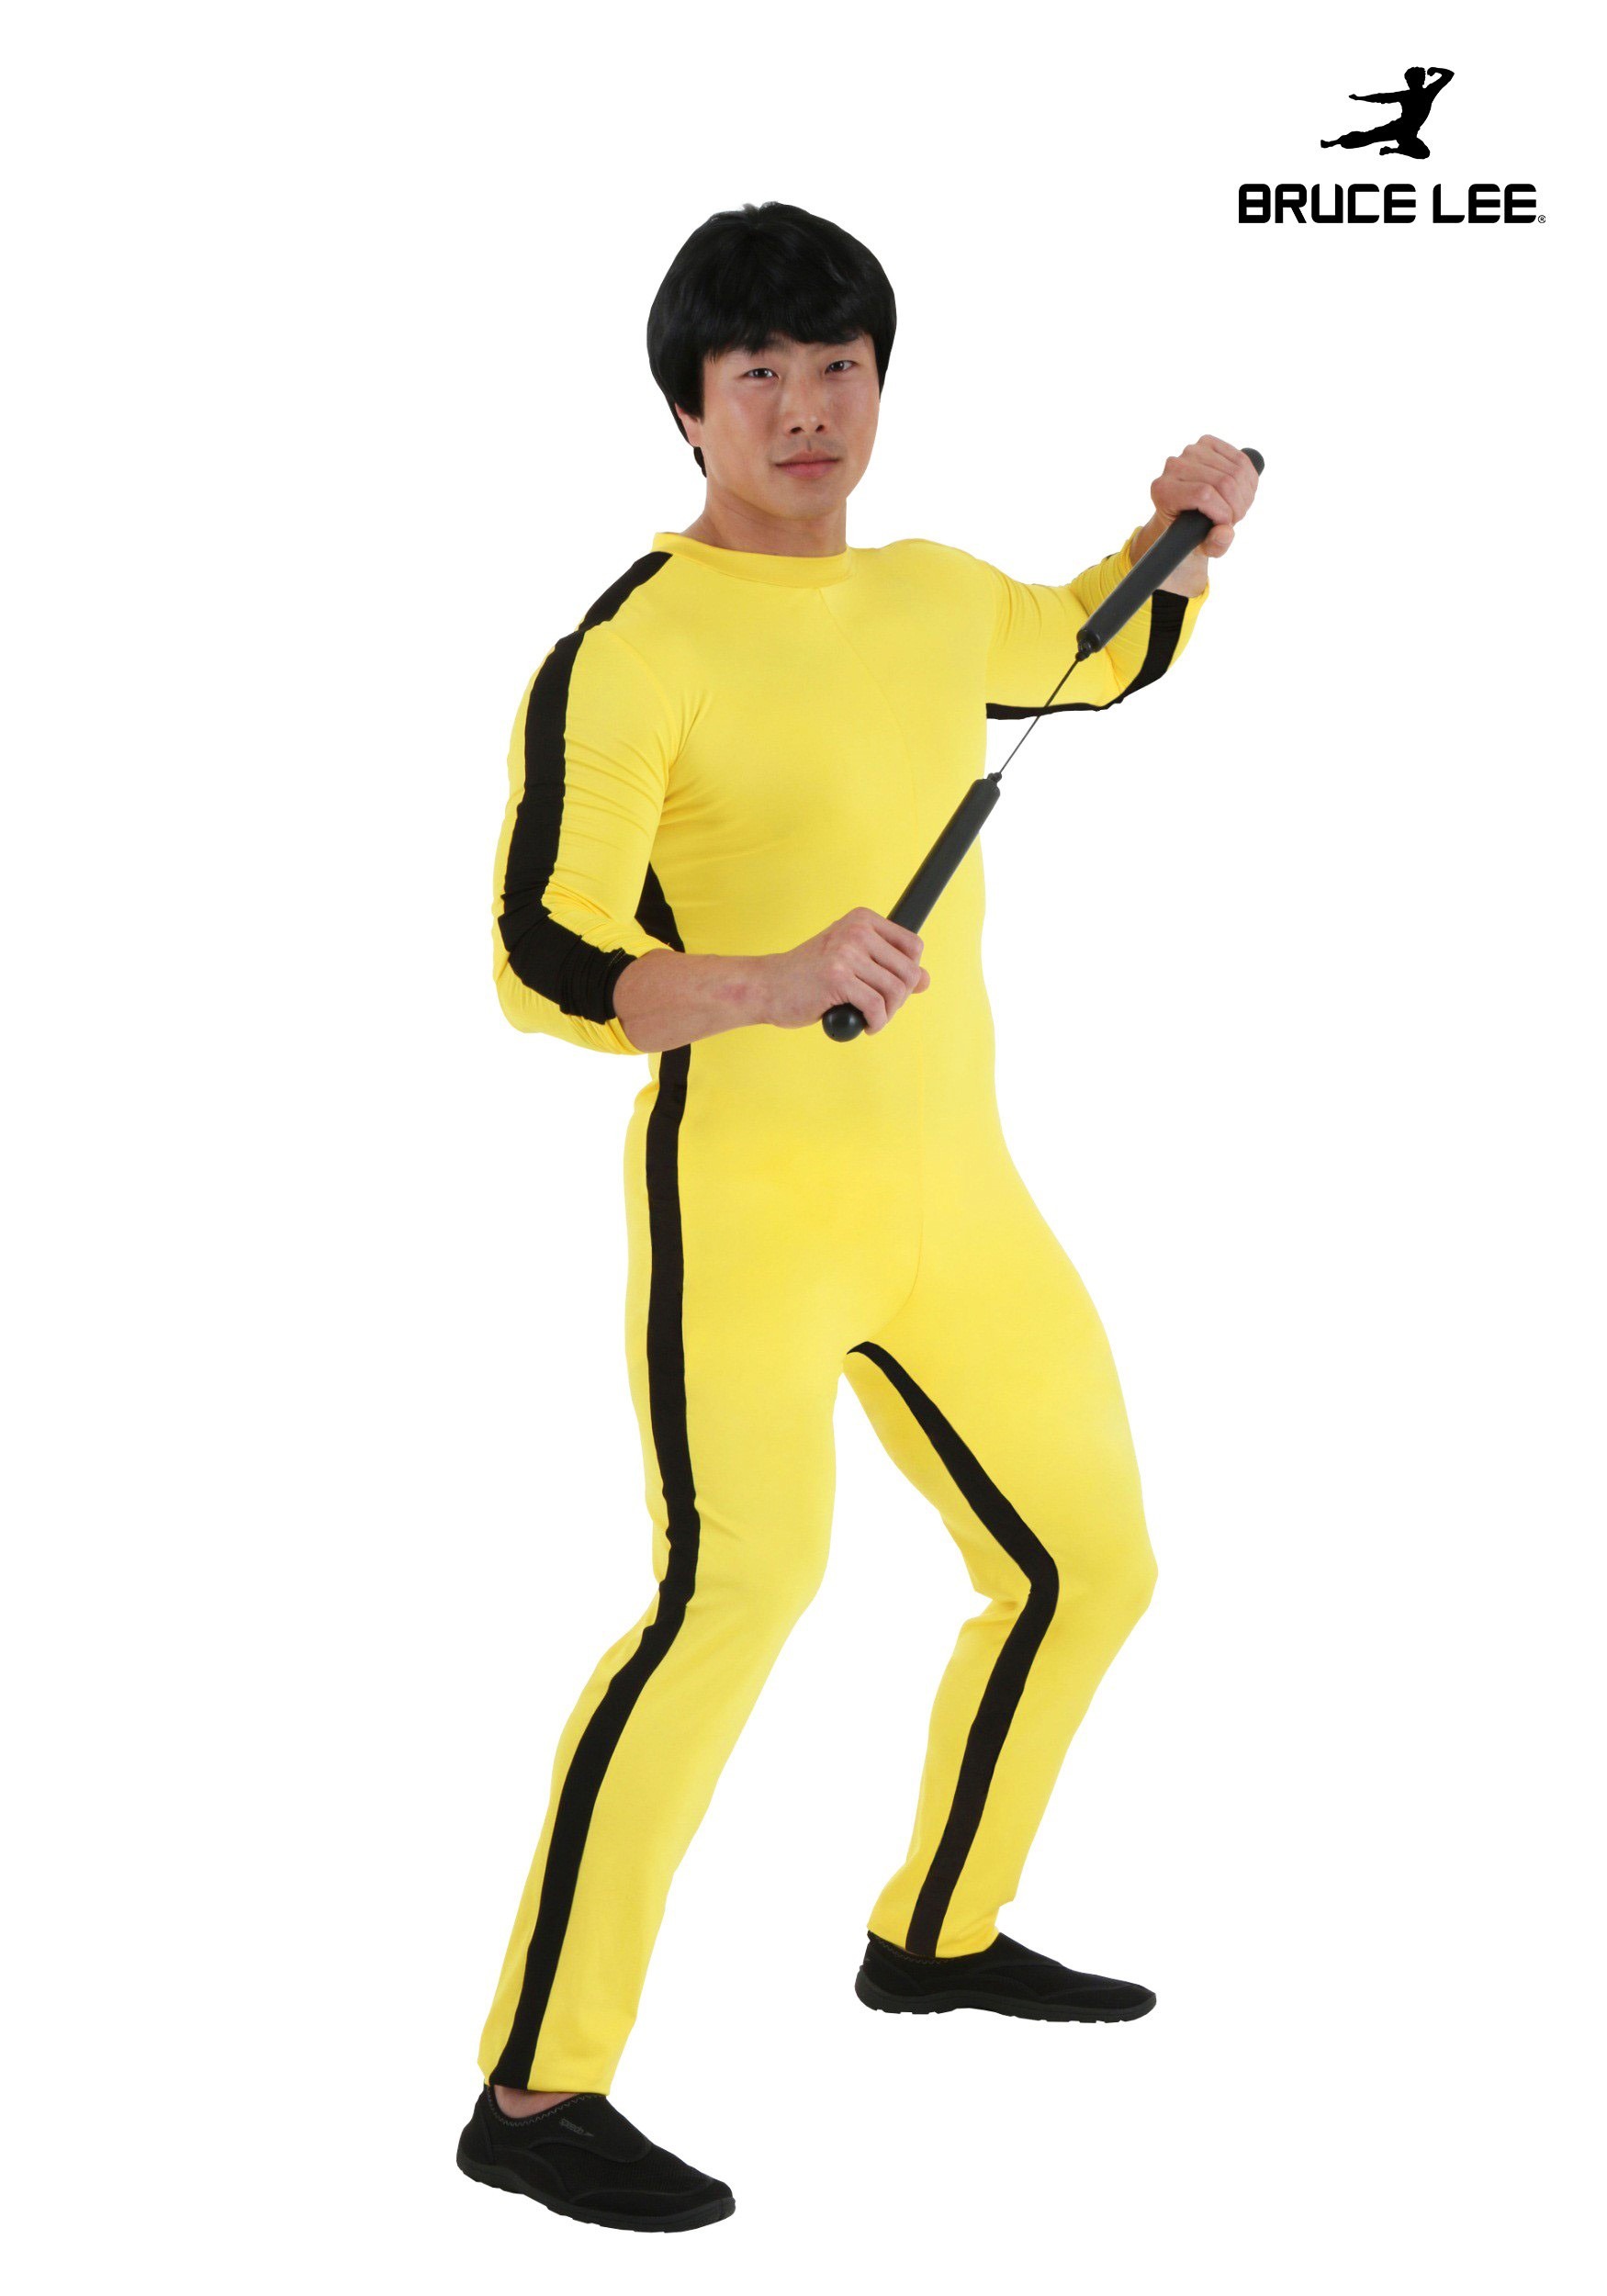 Men's Bruce Lee Costume - image 2 of 3